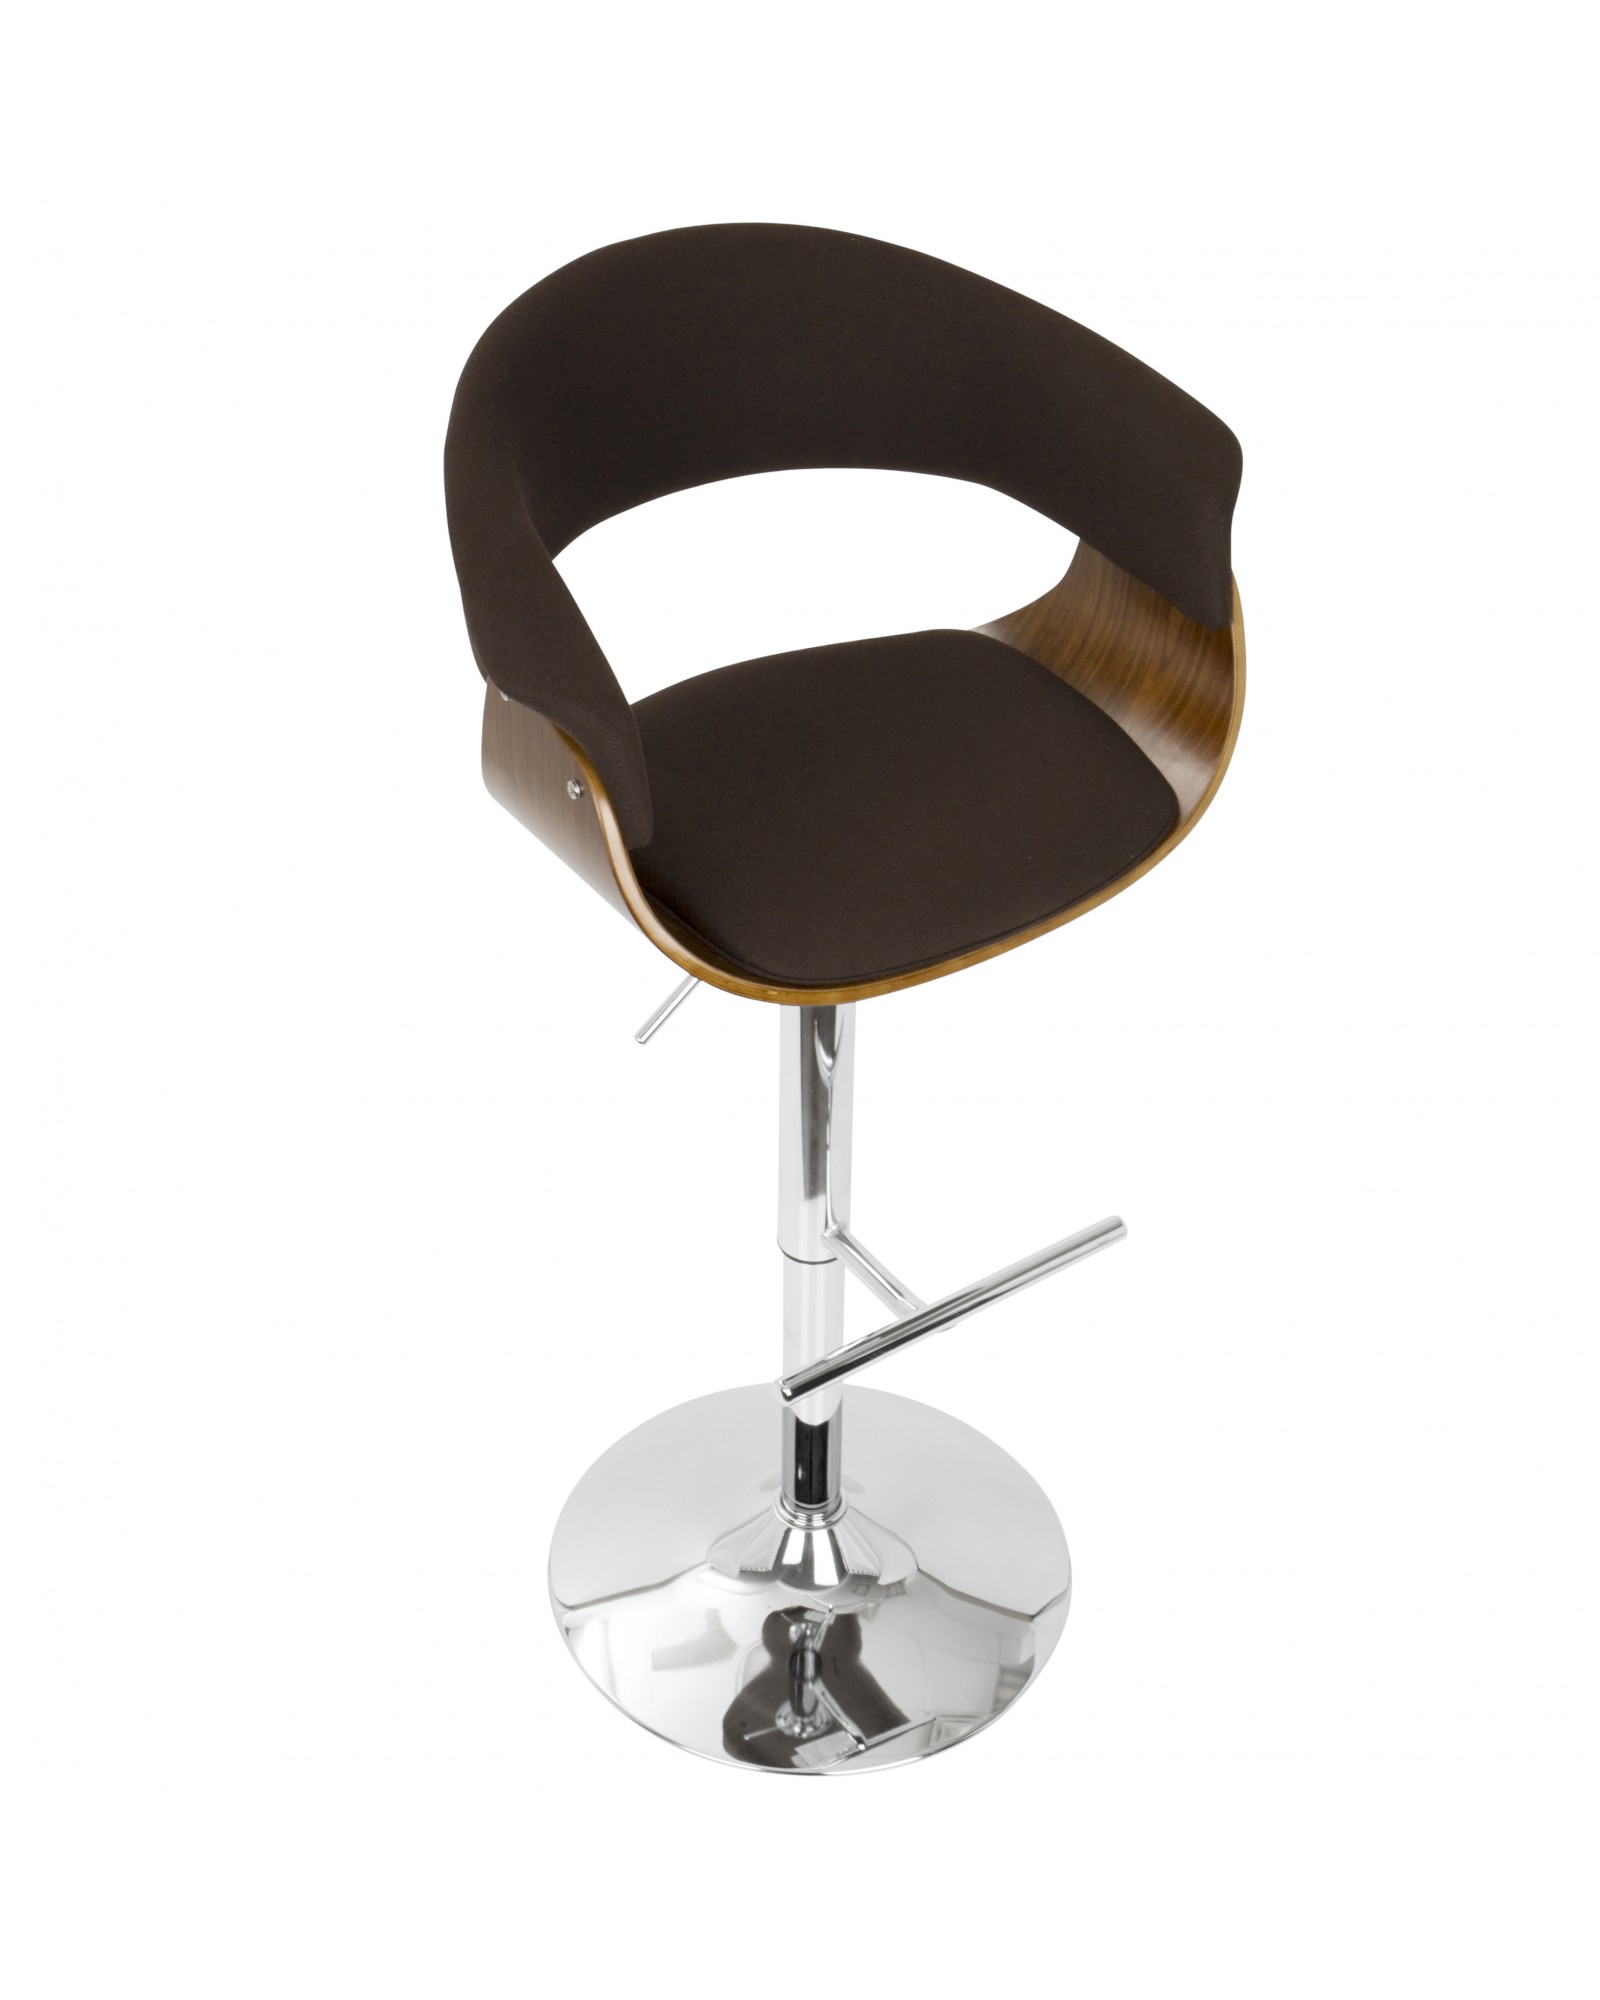 Vintage Mod Mid-Century Modern Adjustable Barstool with Swivel in Walnut and Espresso Fabric